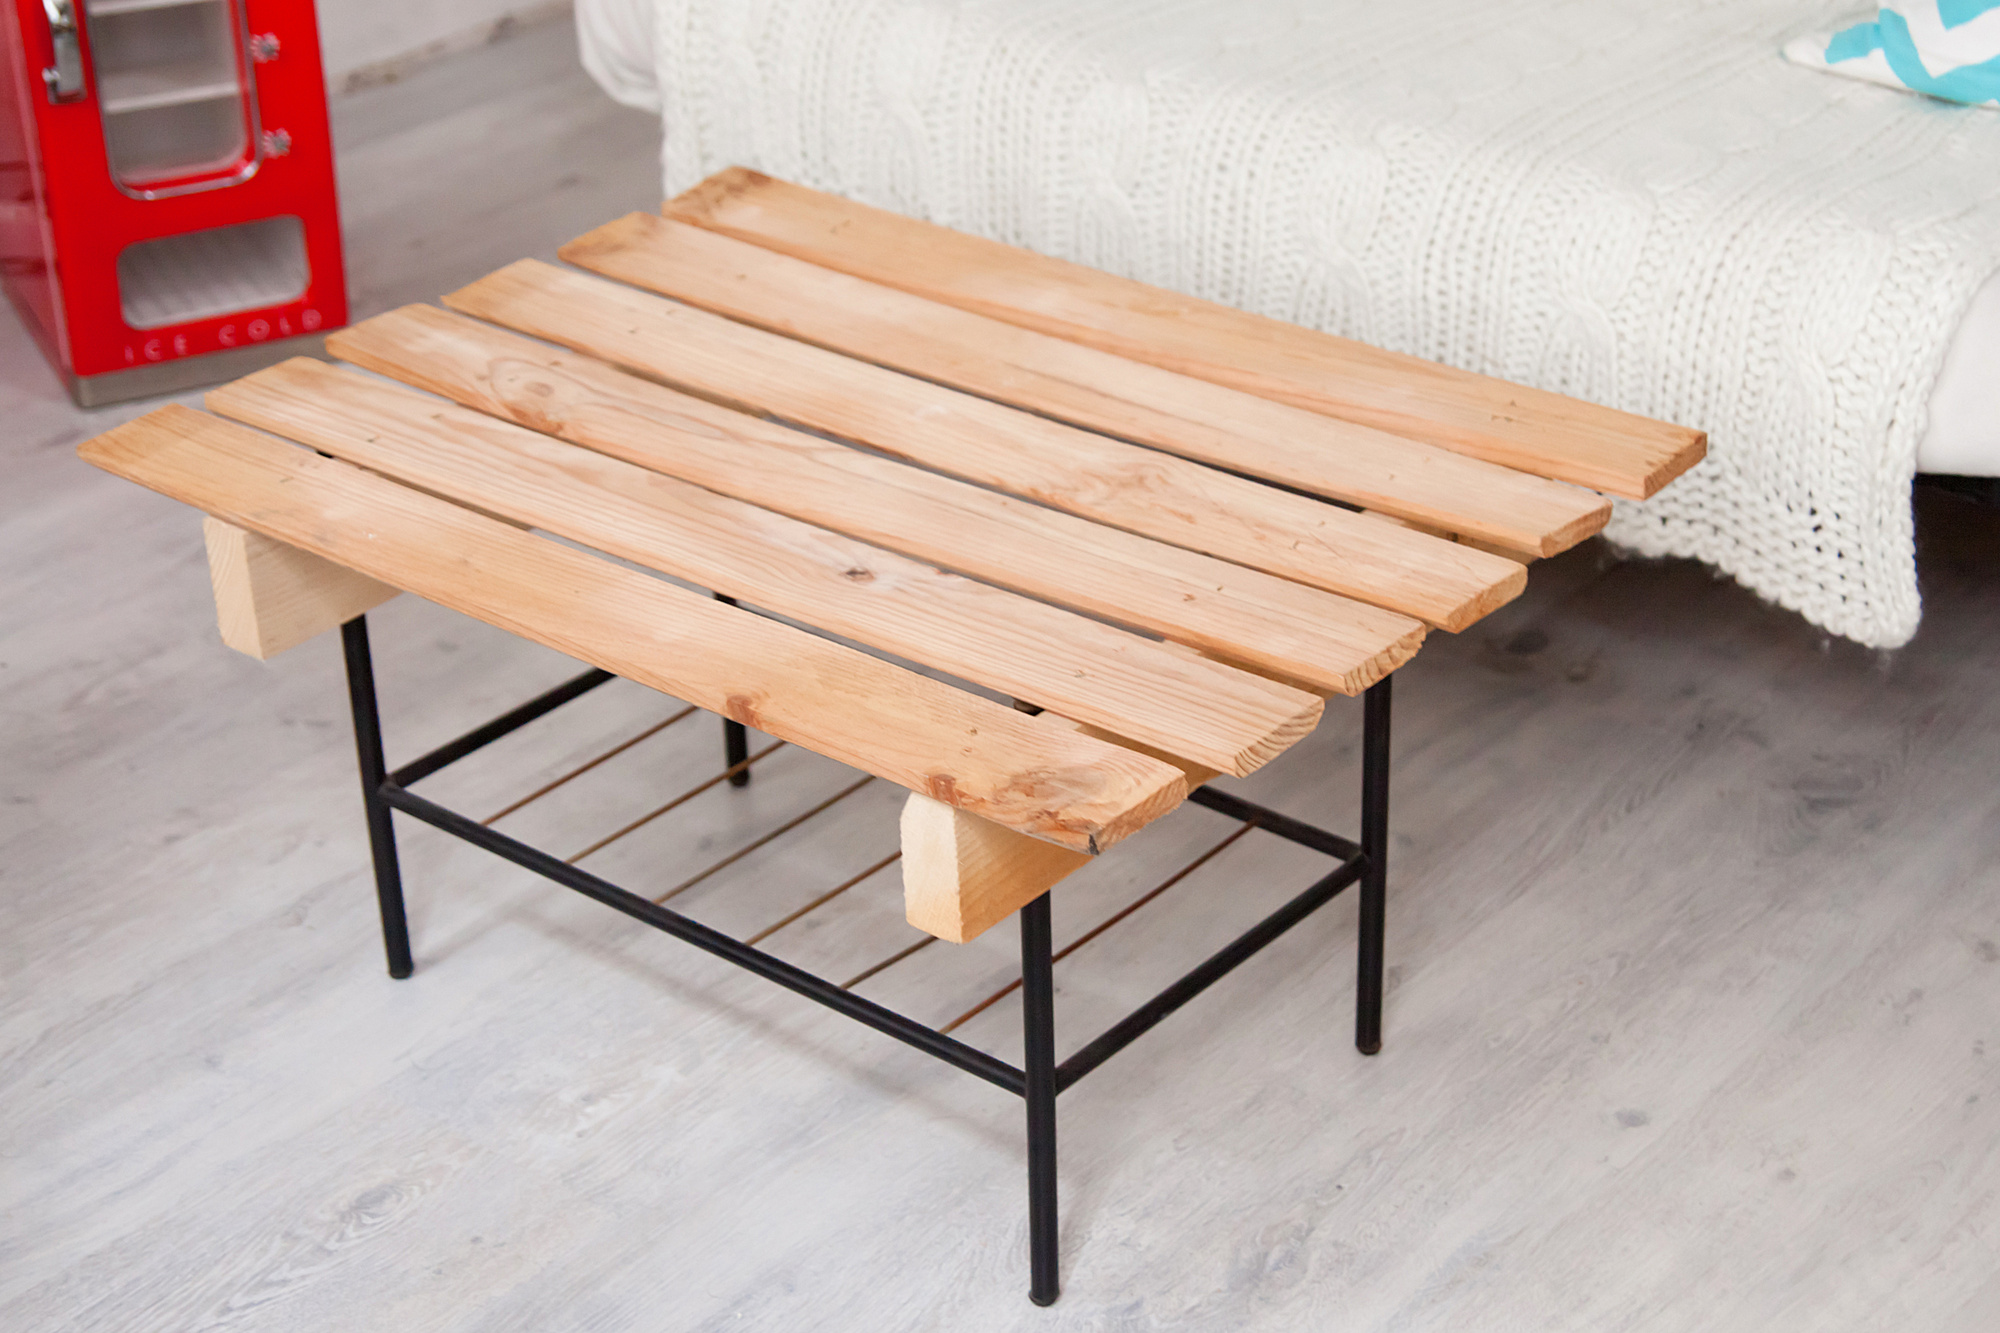 10 DIY Tables Anyone Can Build